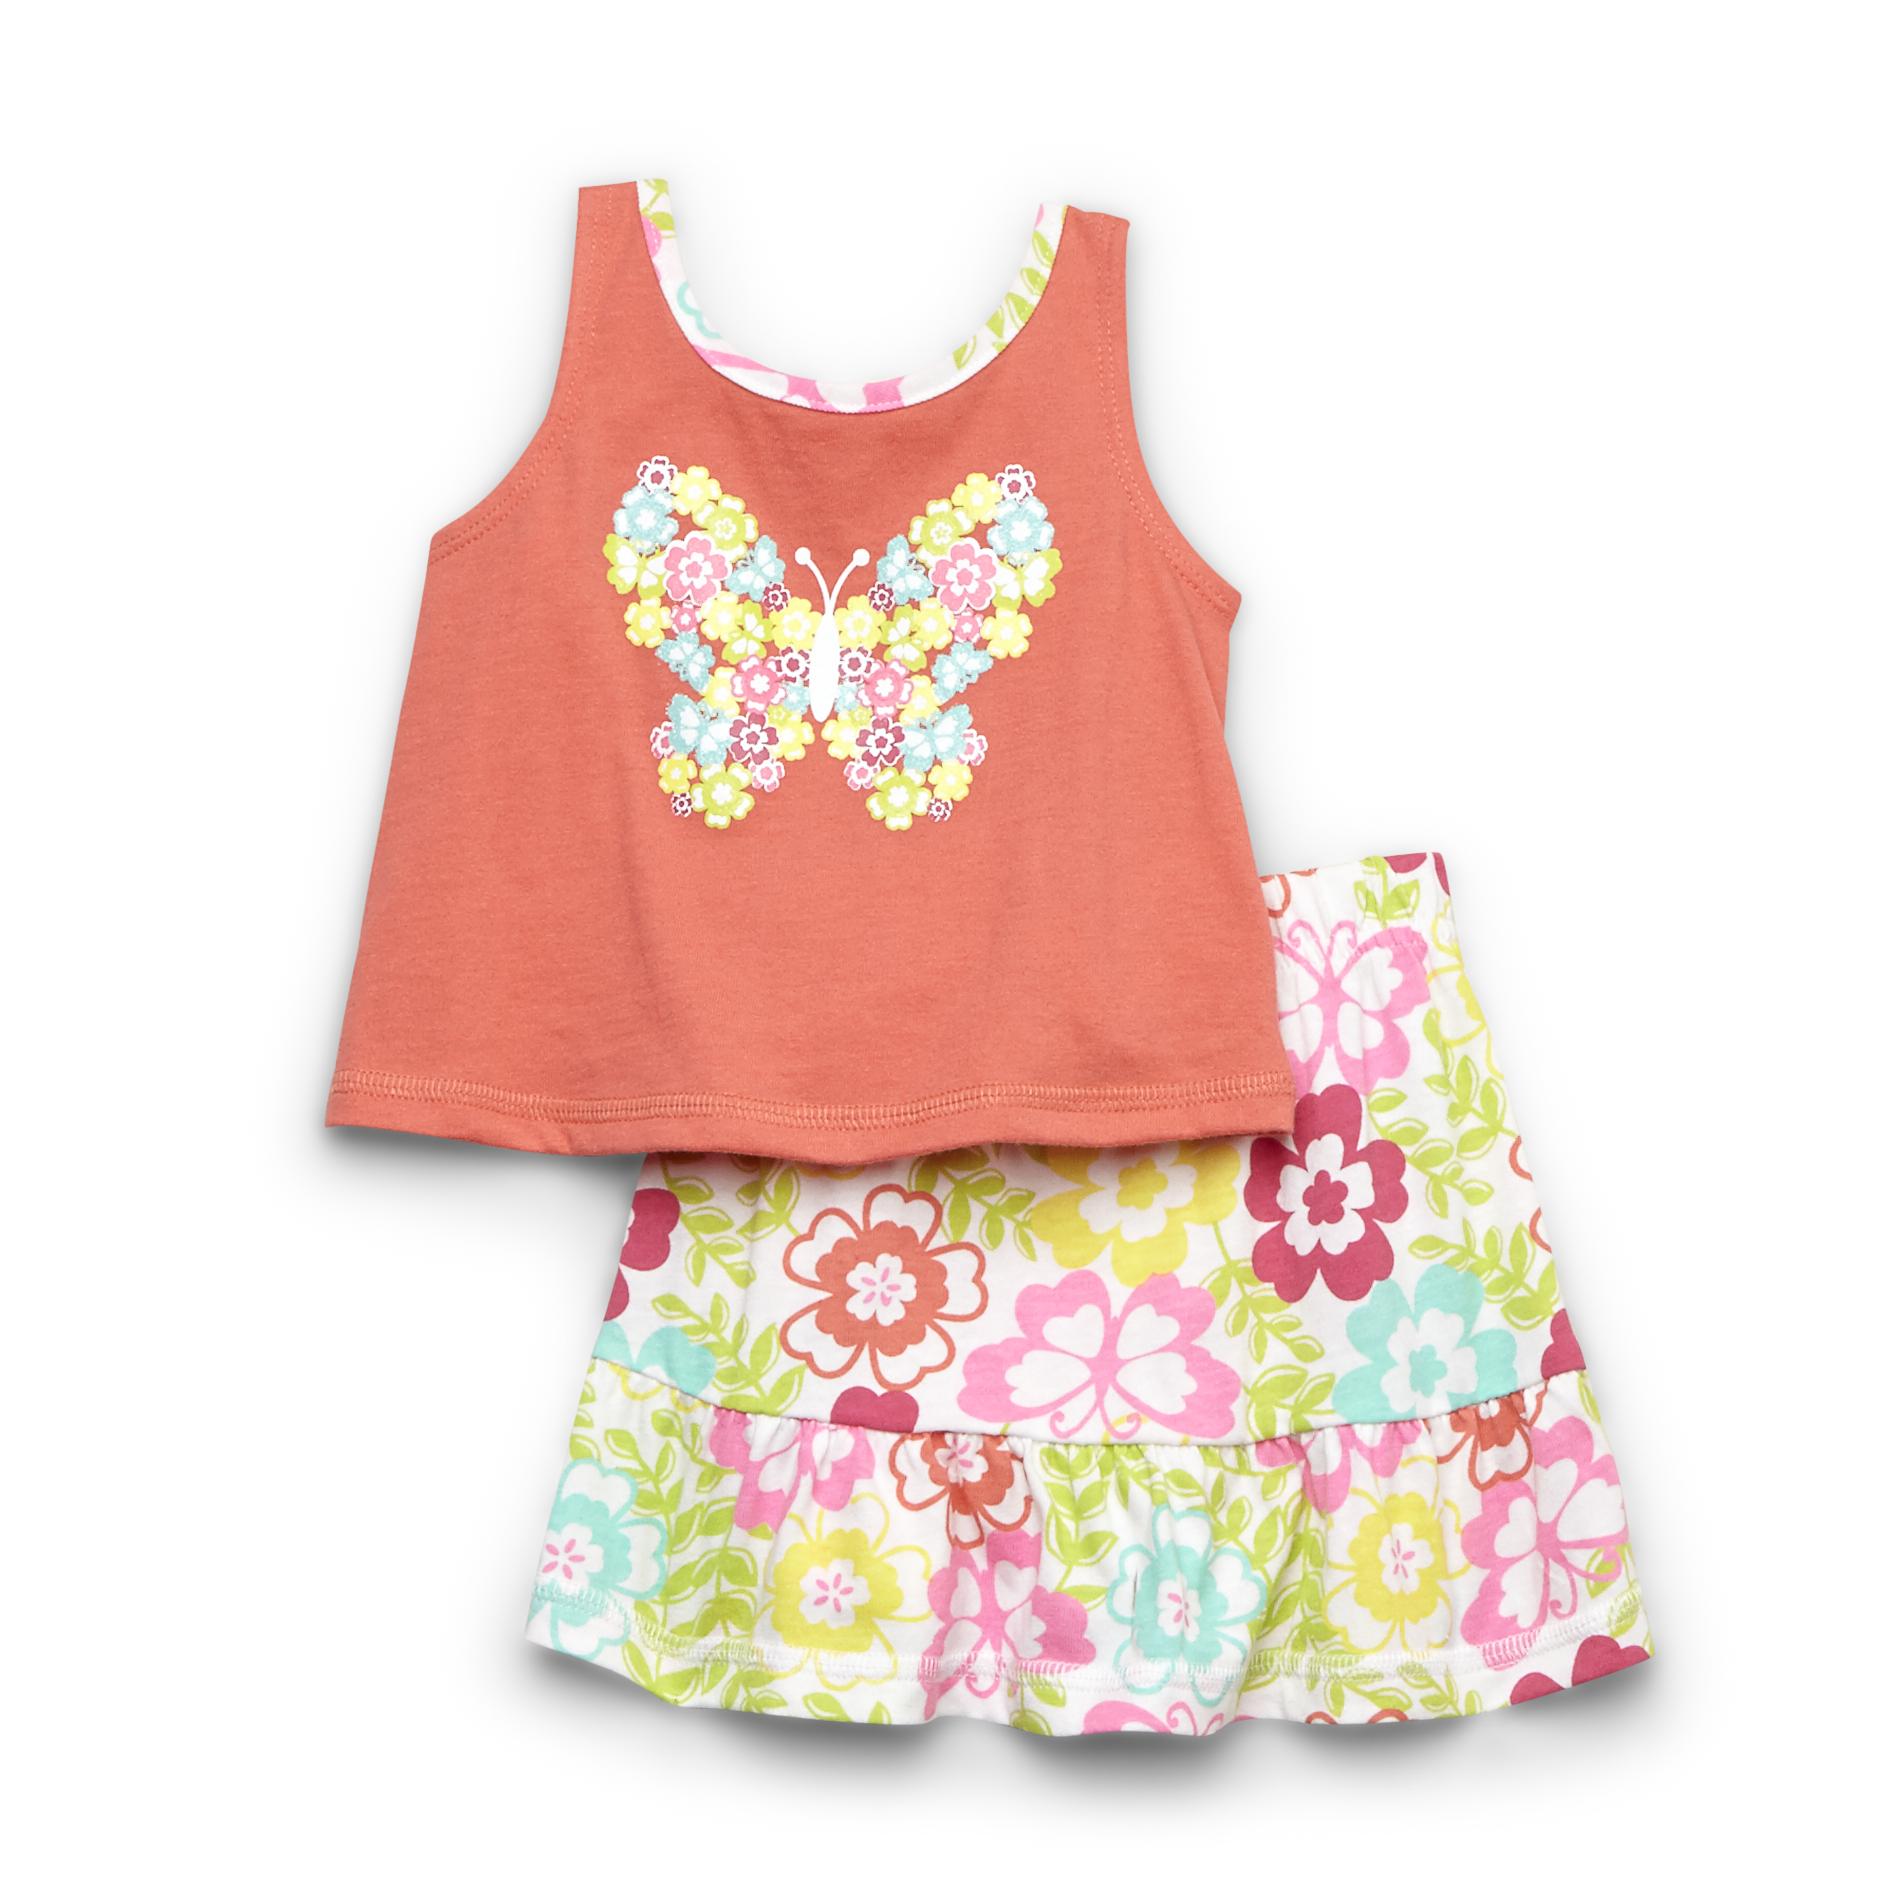 WonderKids Infant & Toddler Girl's Tank Top & Skirt - Butterfly Floral